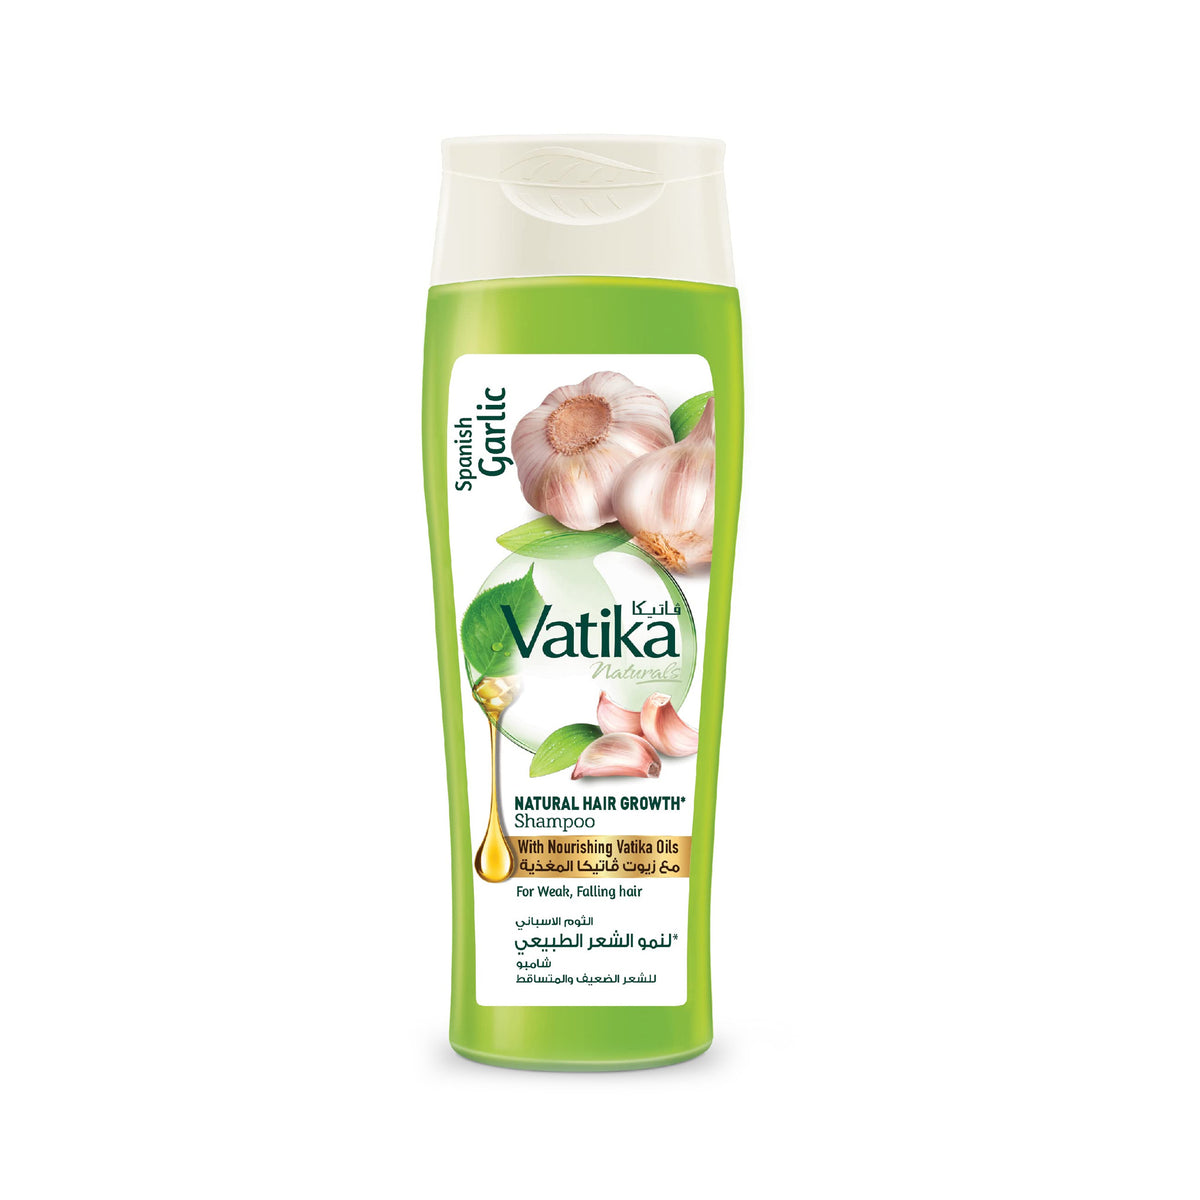 Vatika Natural Hair Growth Shampoo